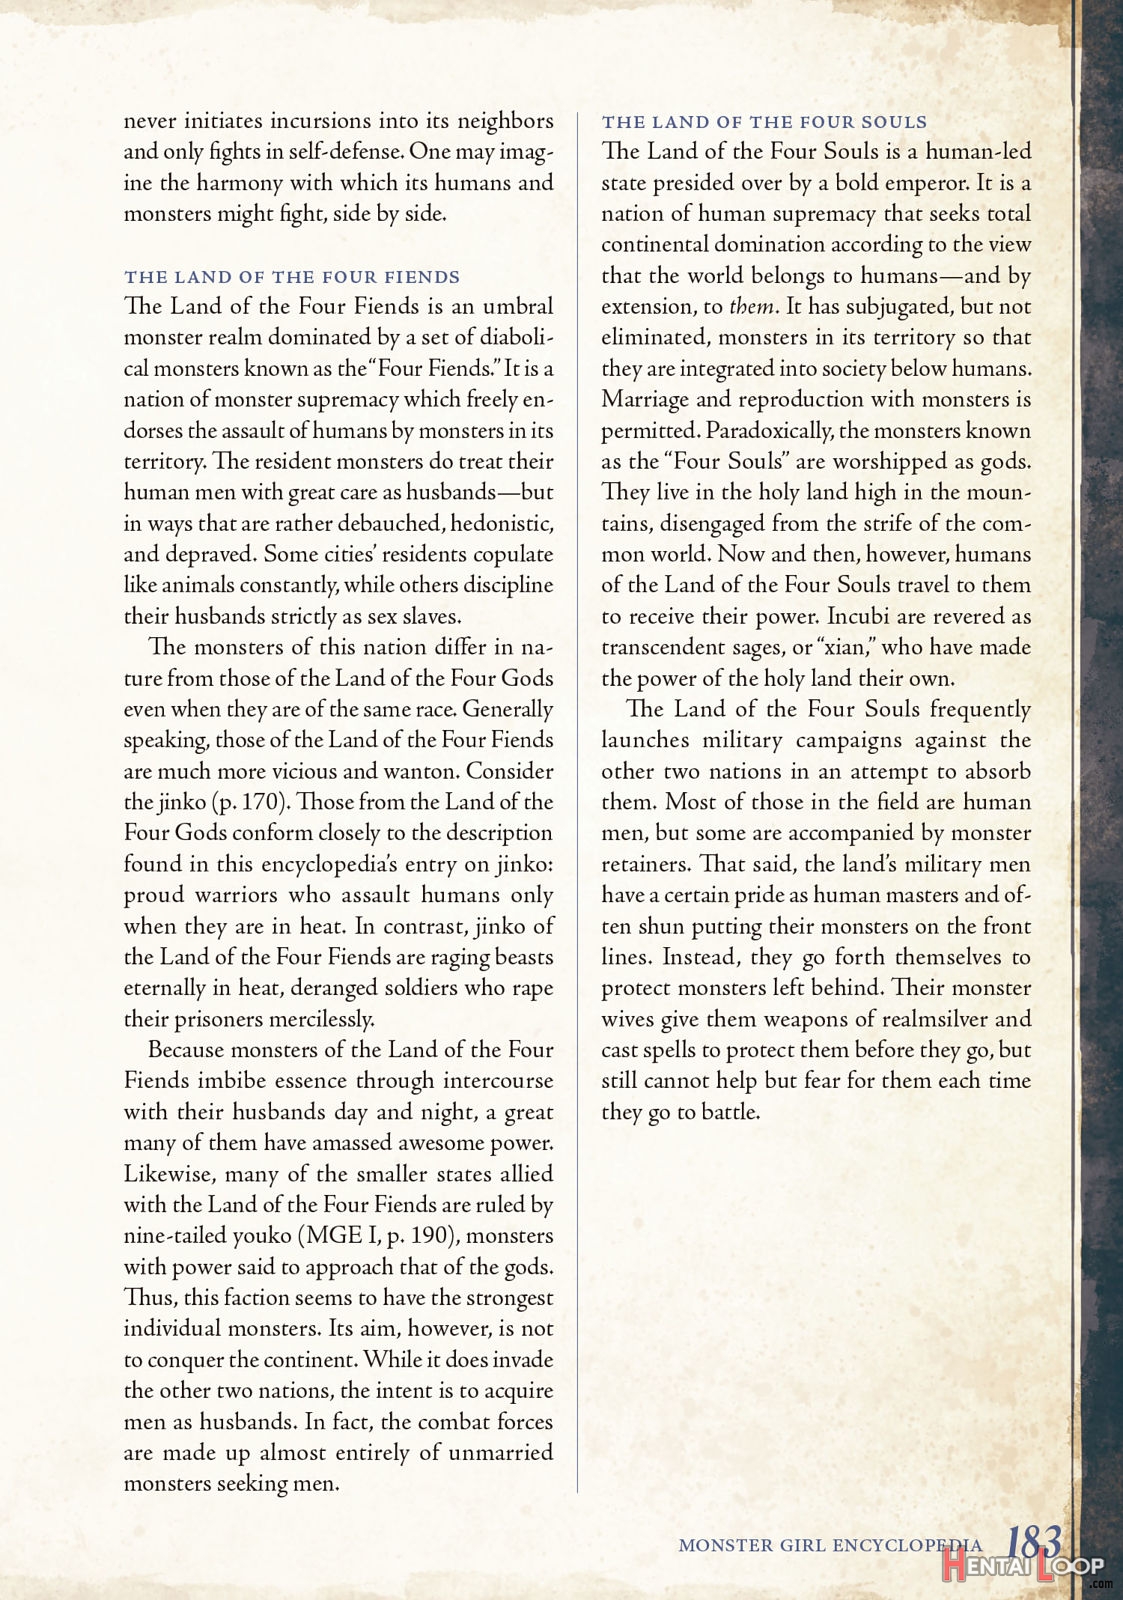 Monster Girl Encyclopedia Vol. 2 page 184